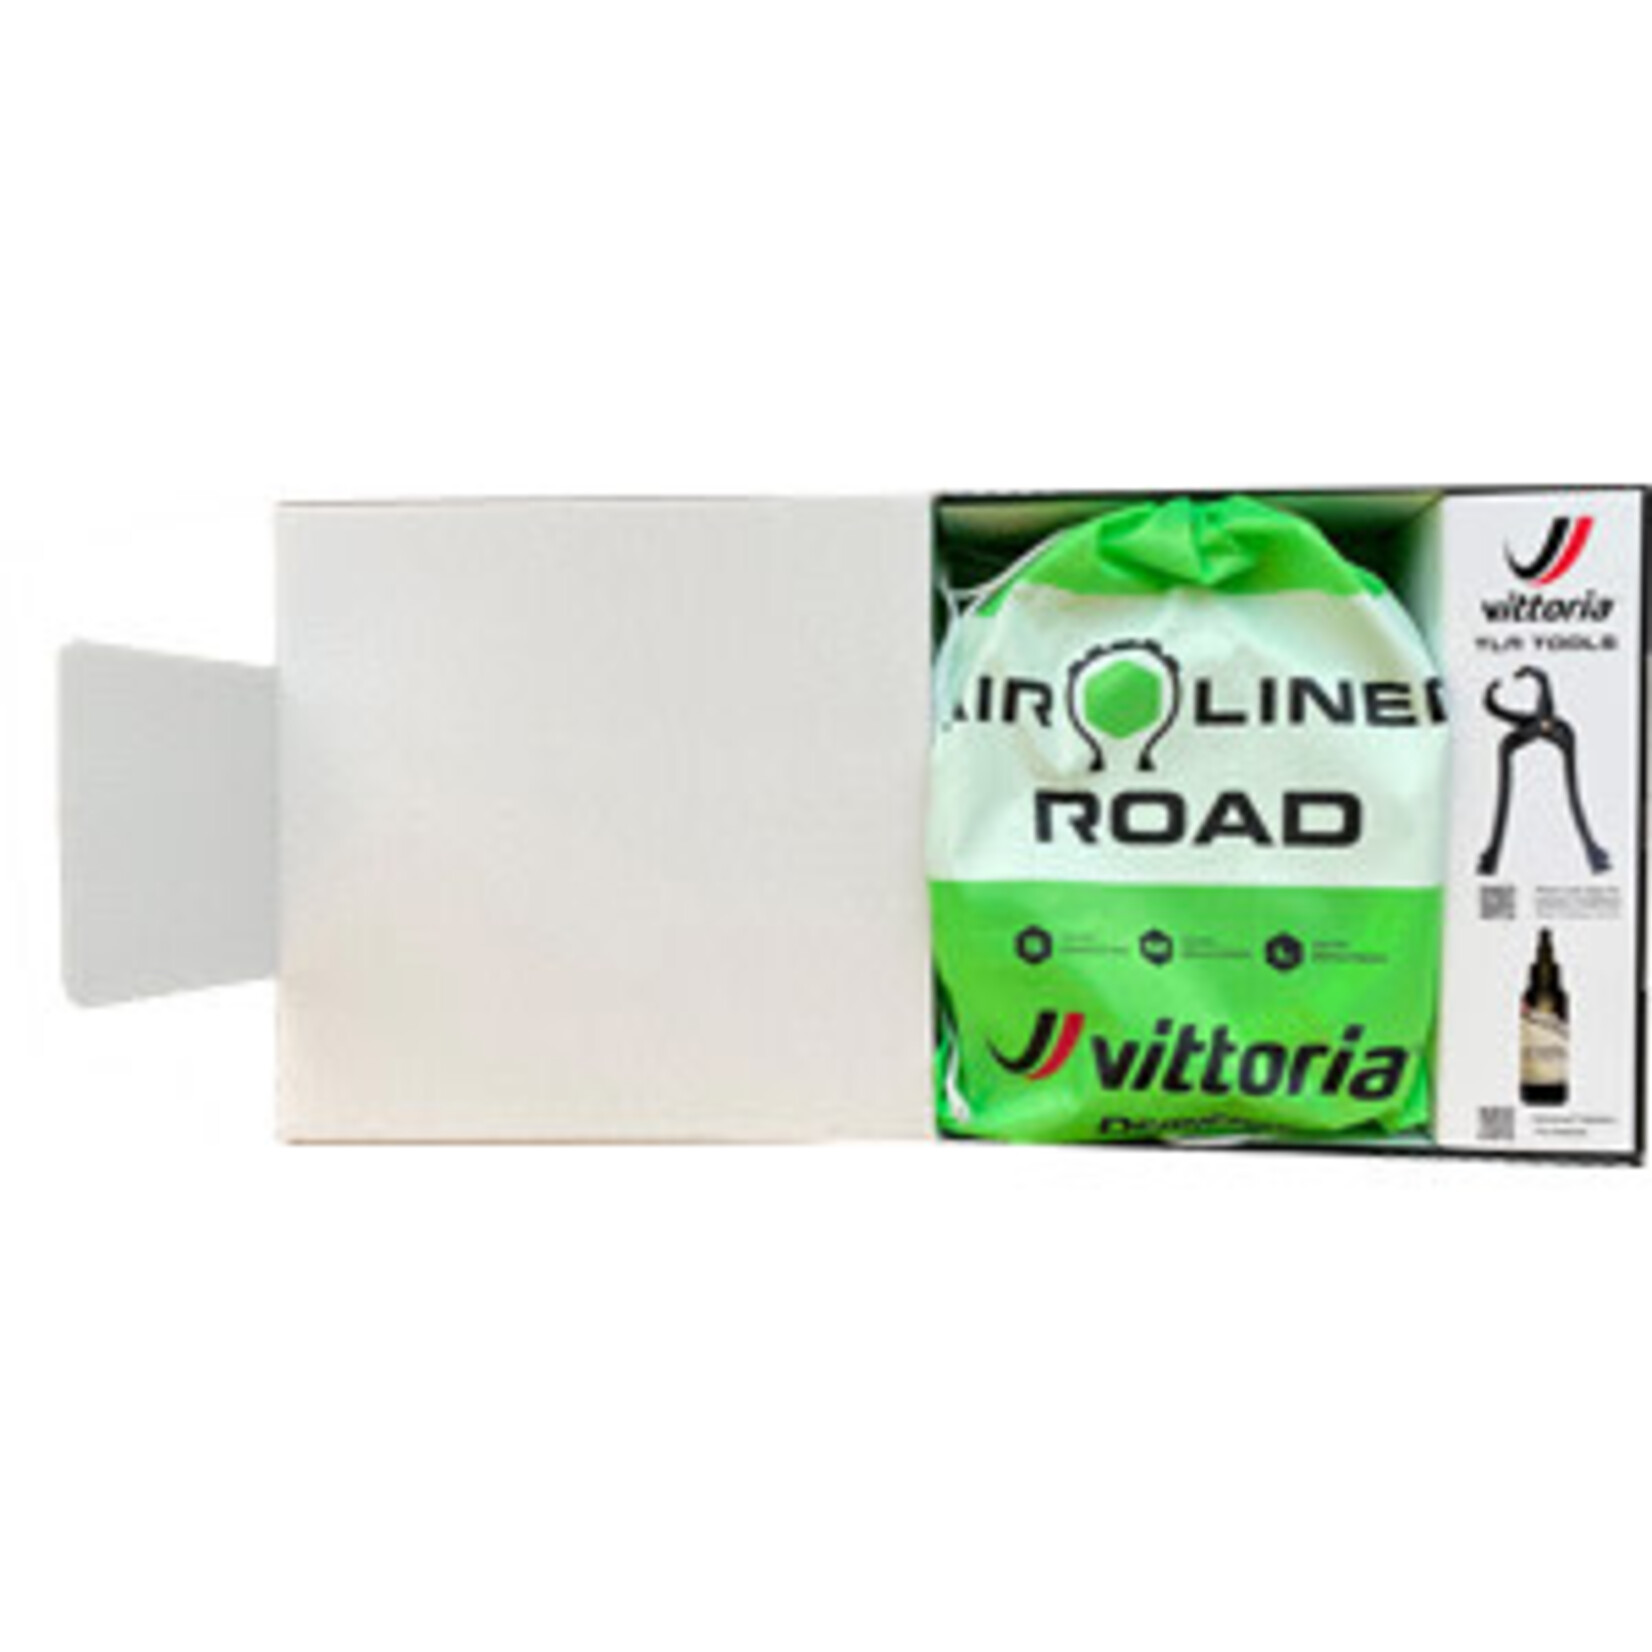 VITTORIA Vittoria Air Tyre Tubeless Road Kit Medium for 28mm